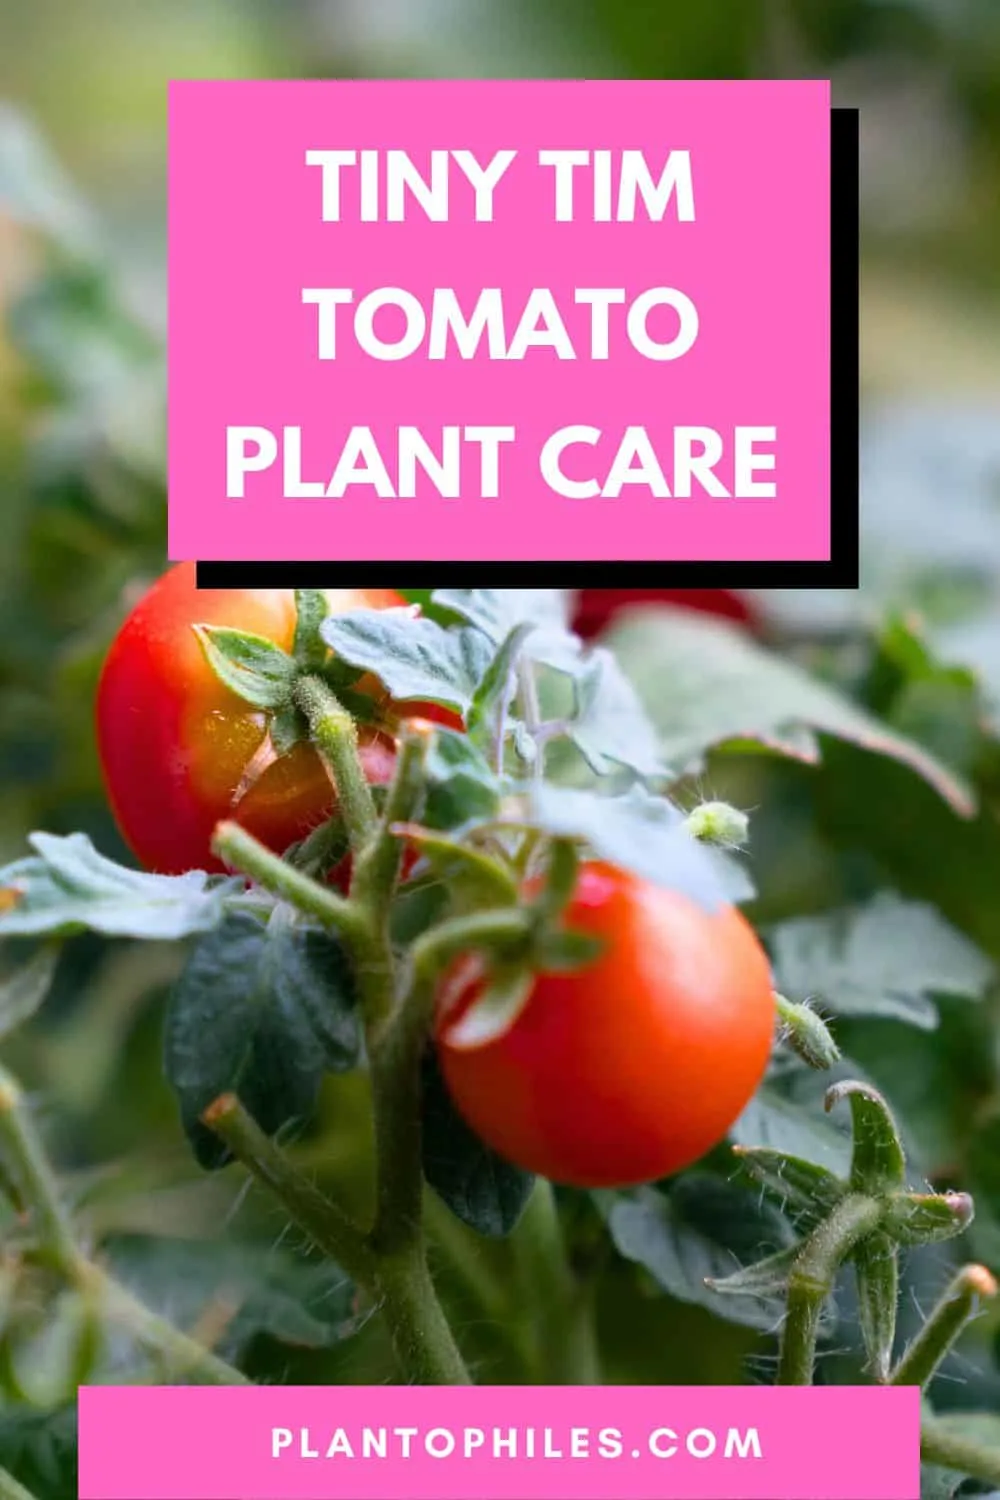 Tiny Tim Tomato Plant Care